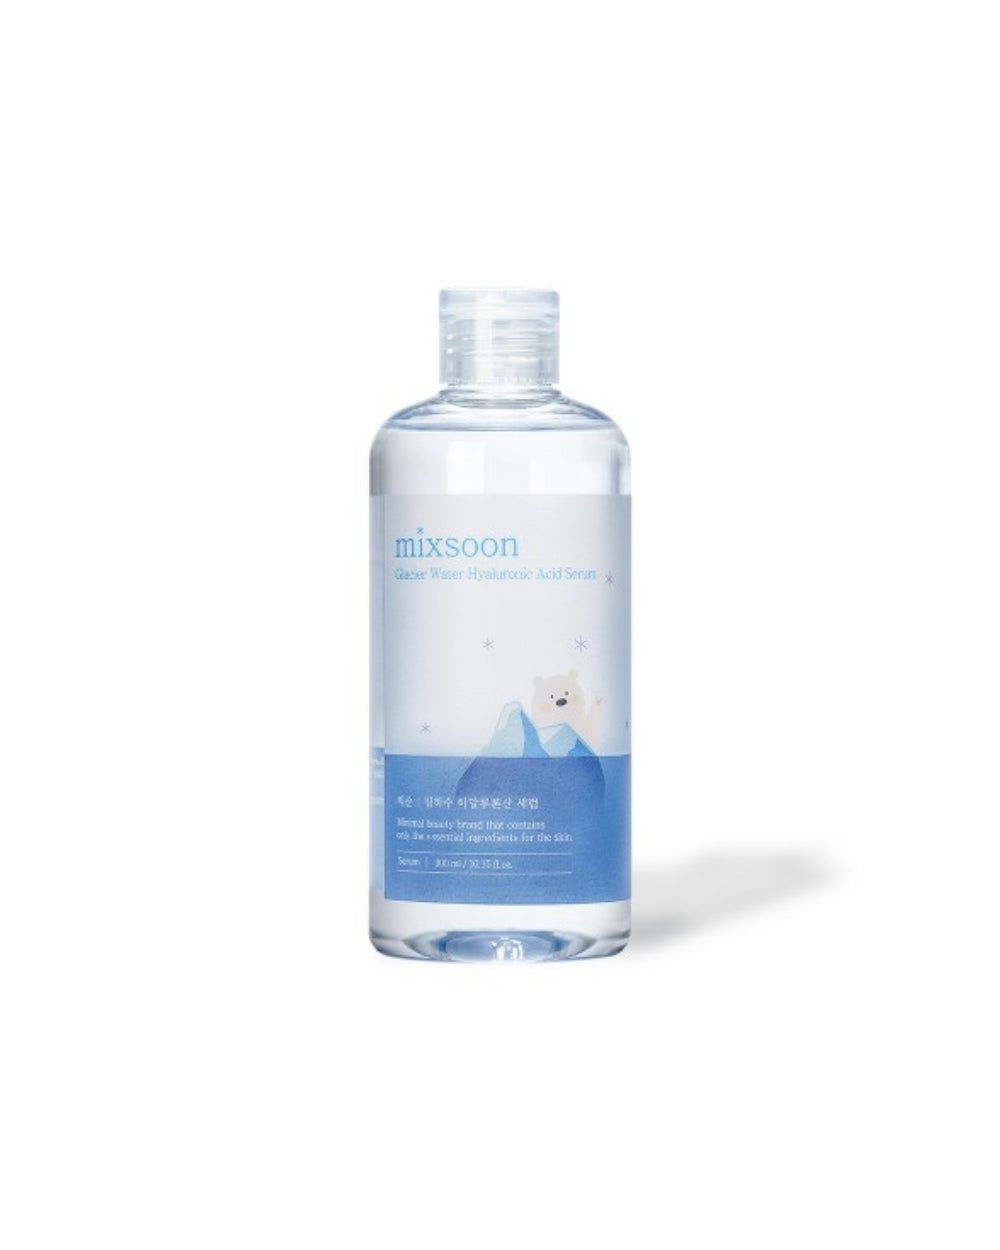 Mixsoon - Glacier Water Hyaluronic Acid Serum